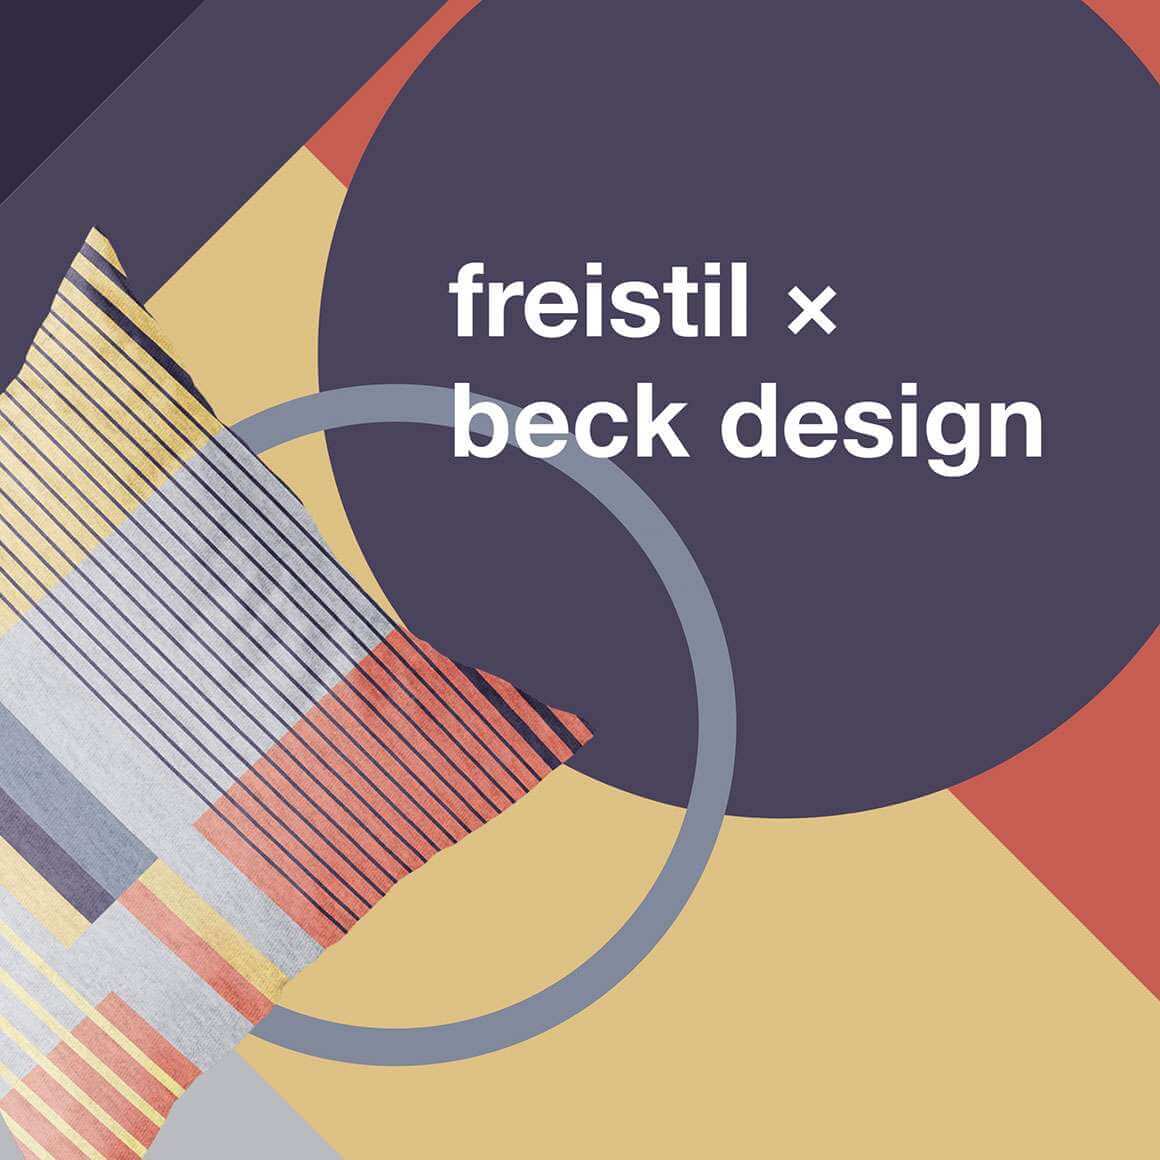 Kissen freistil 109 limited Edition, freistil Rolf Benz, Beck Design